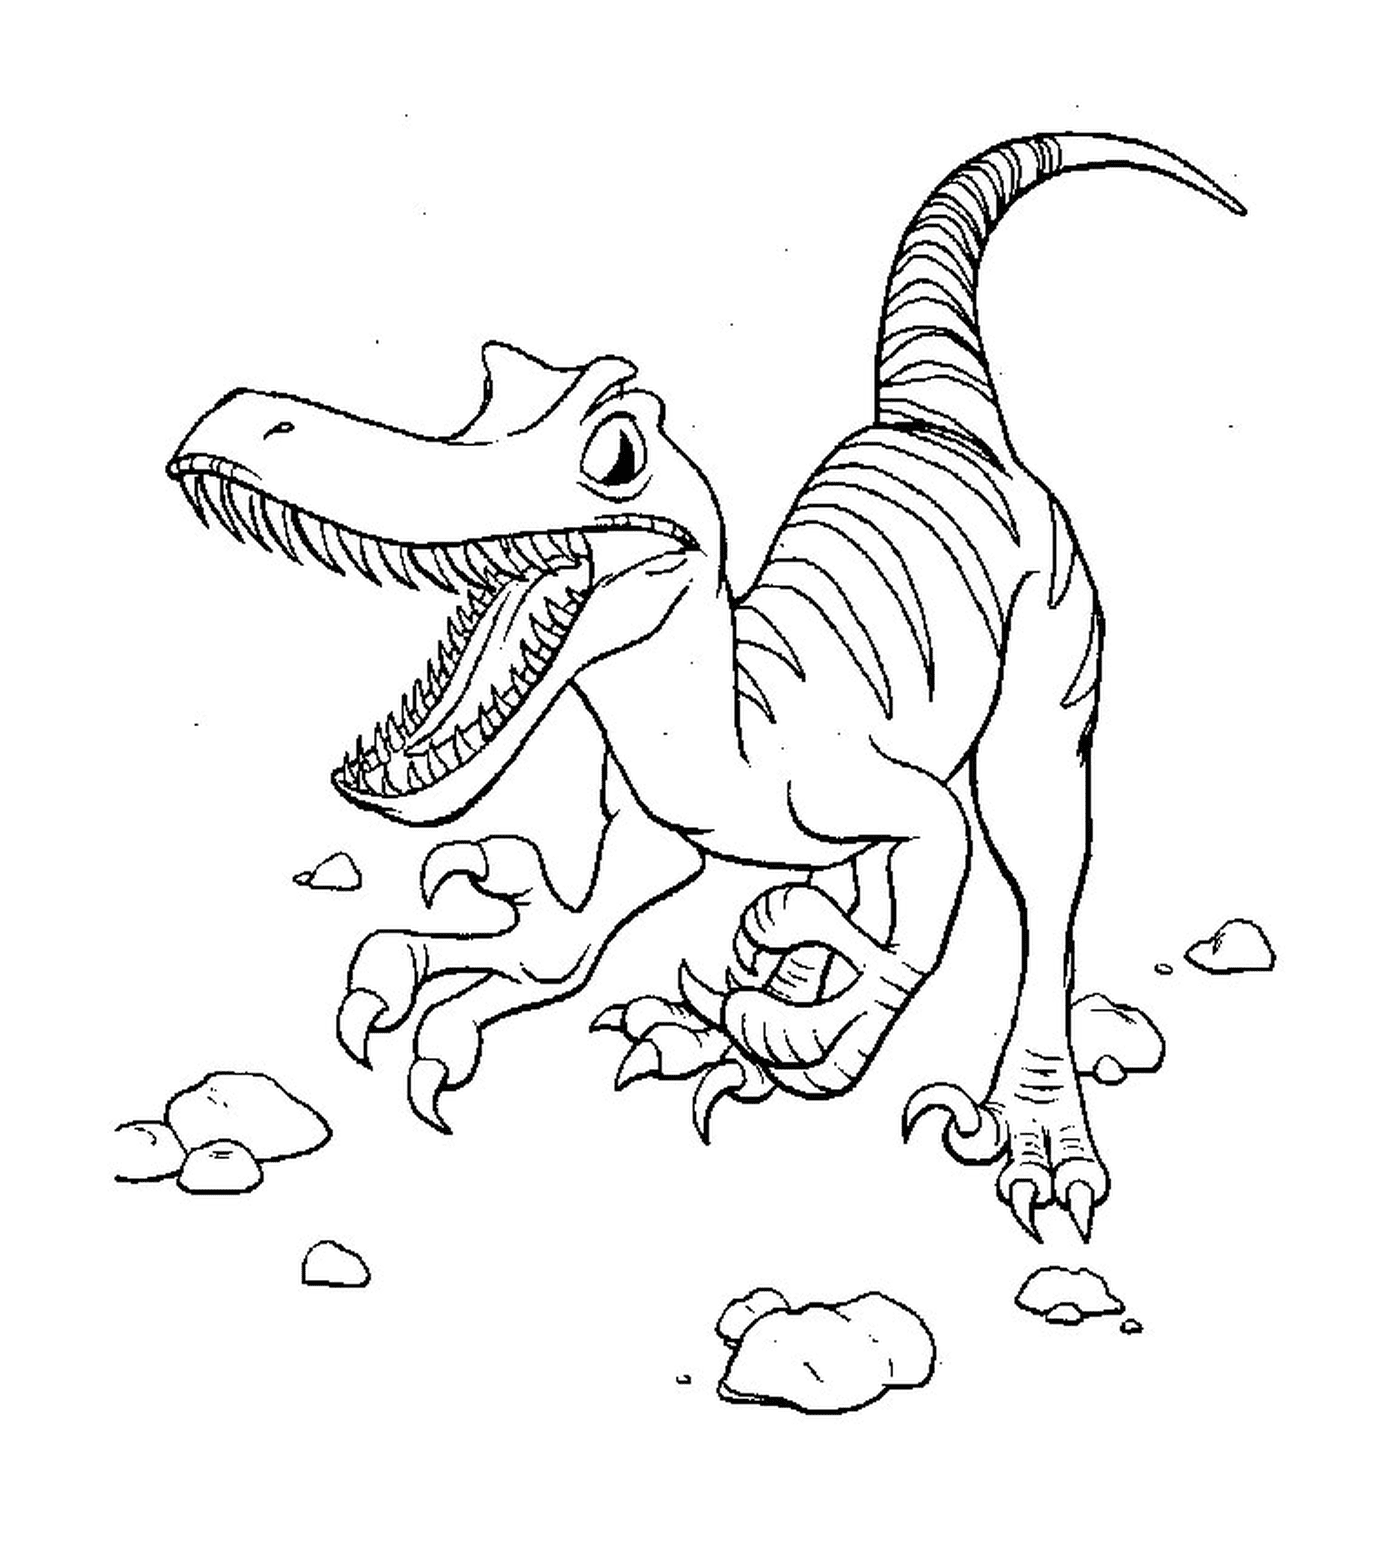  Dinosaur in the earth 